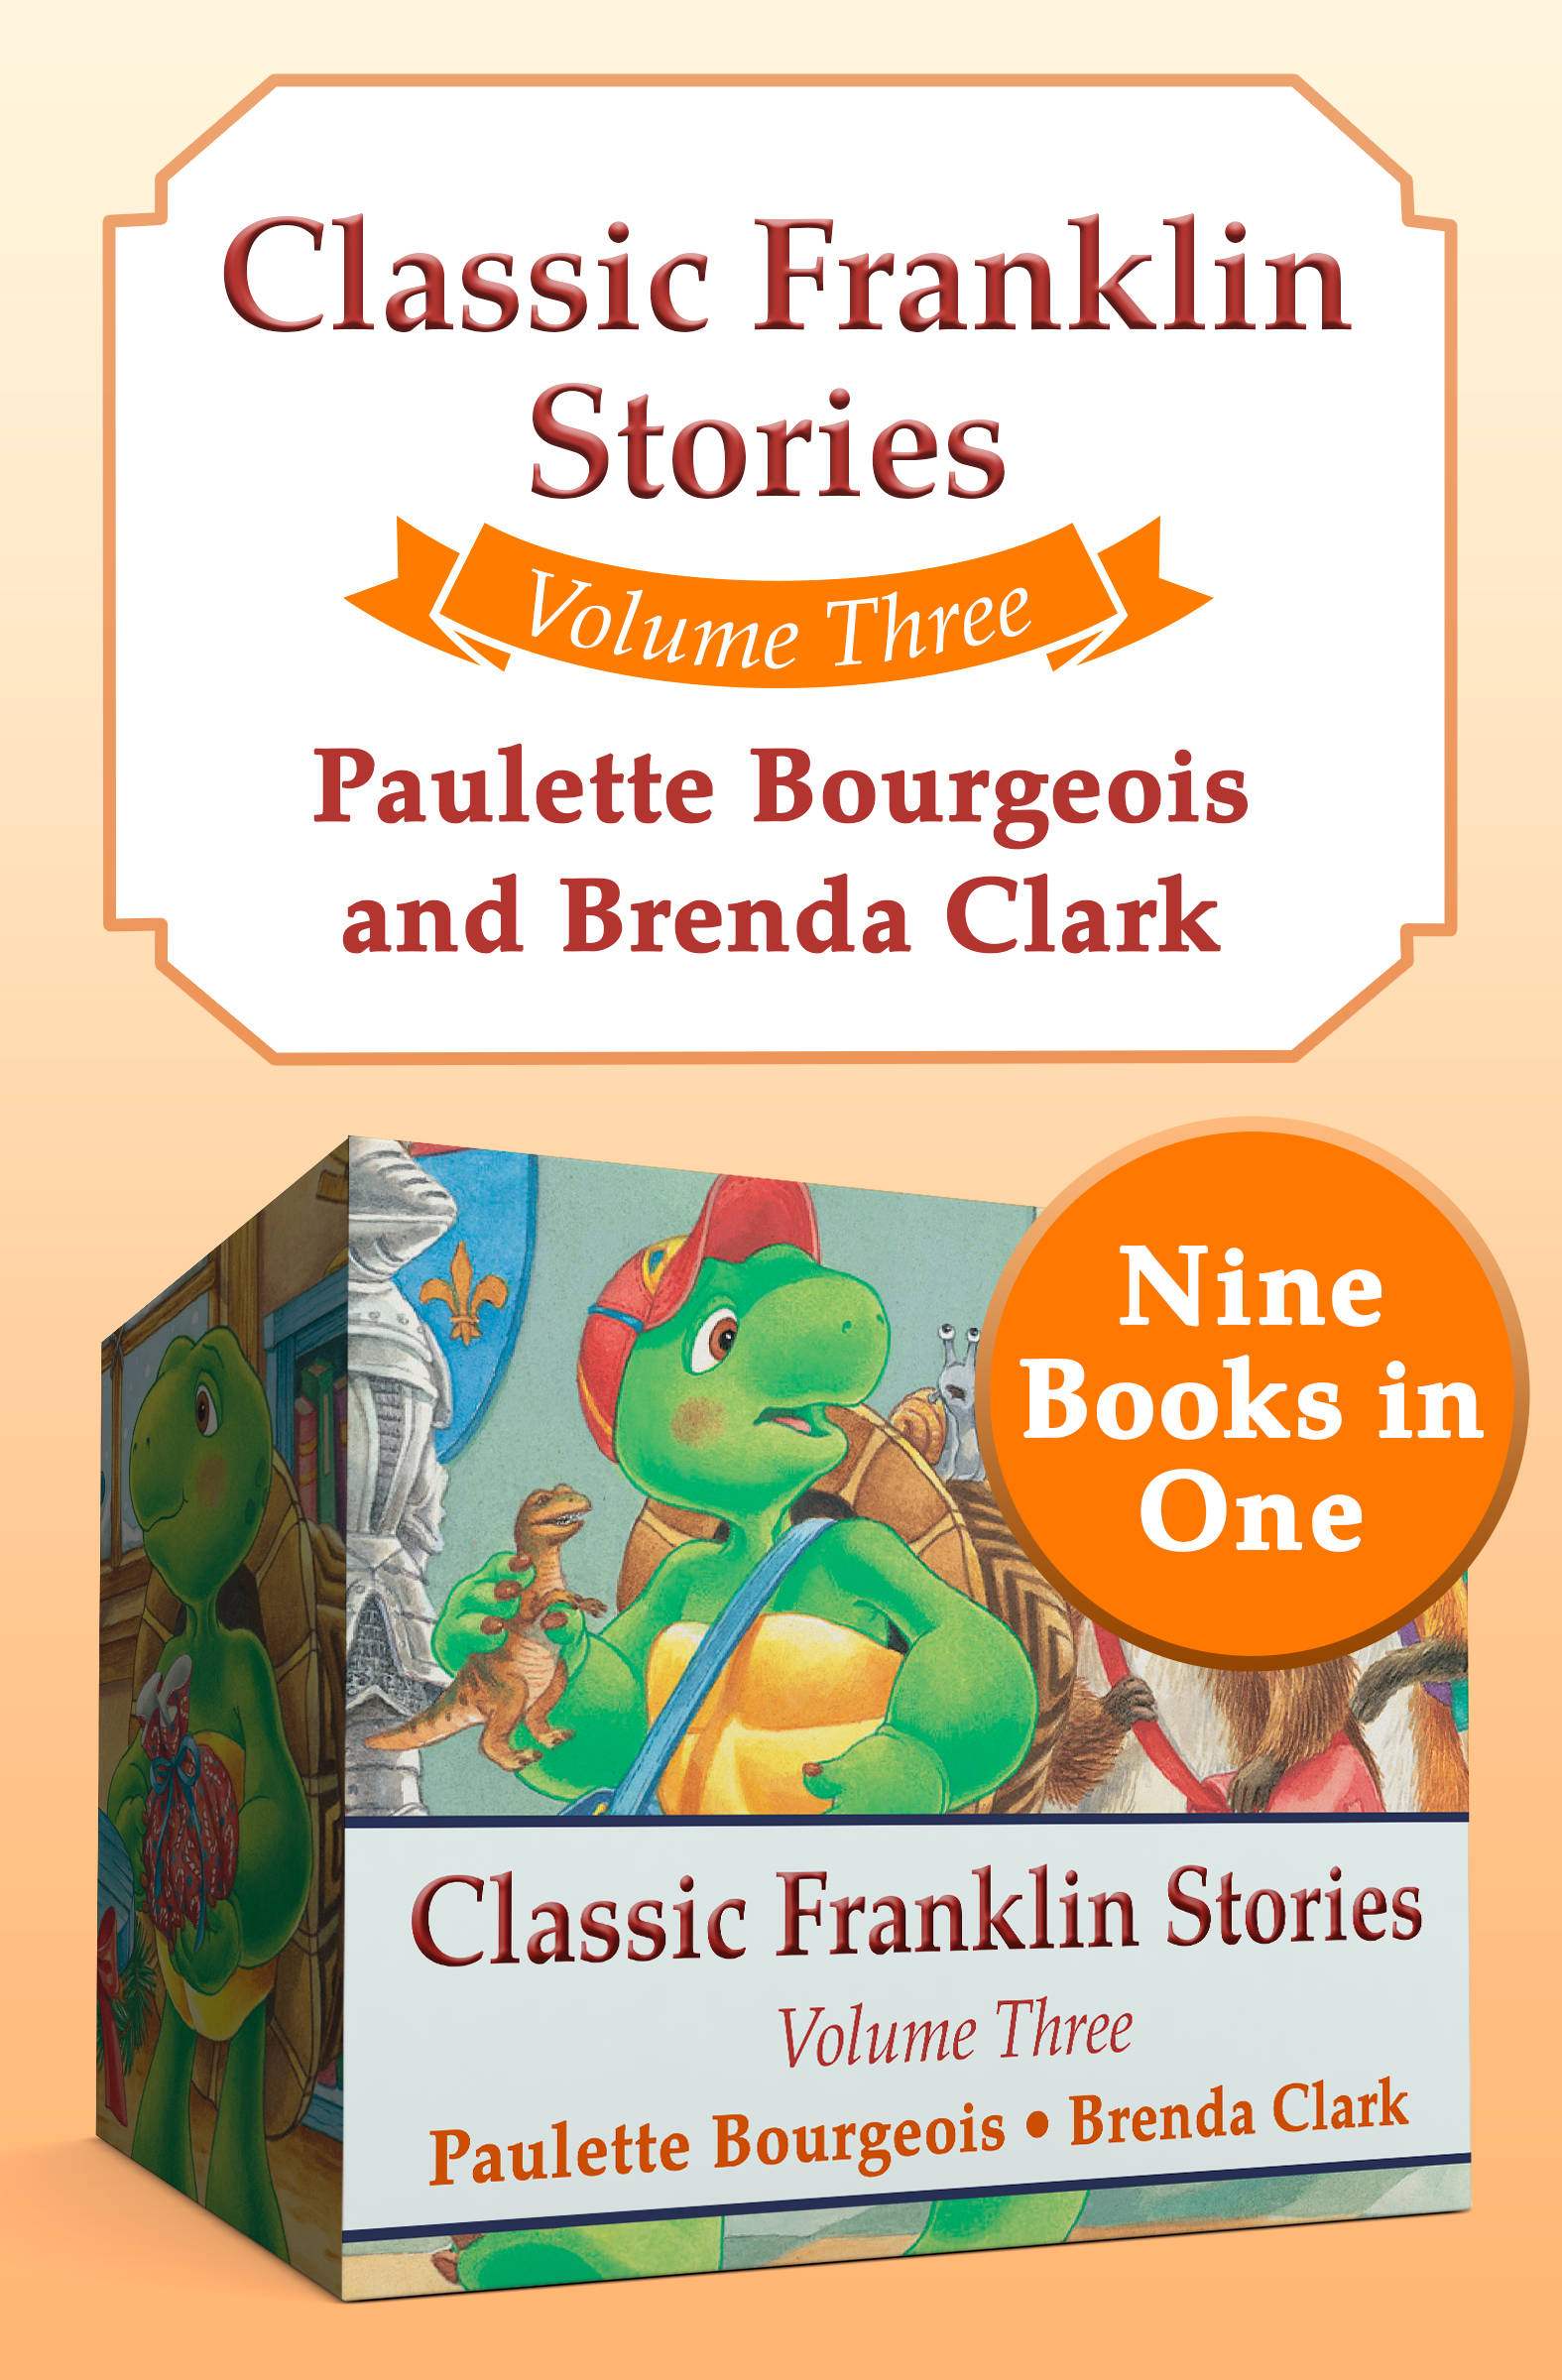 Classic Franklin Stories Volume Three